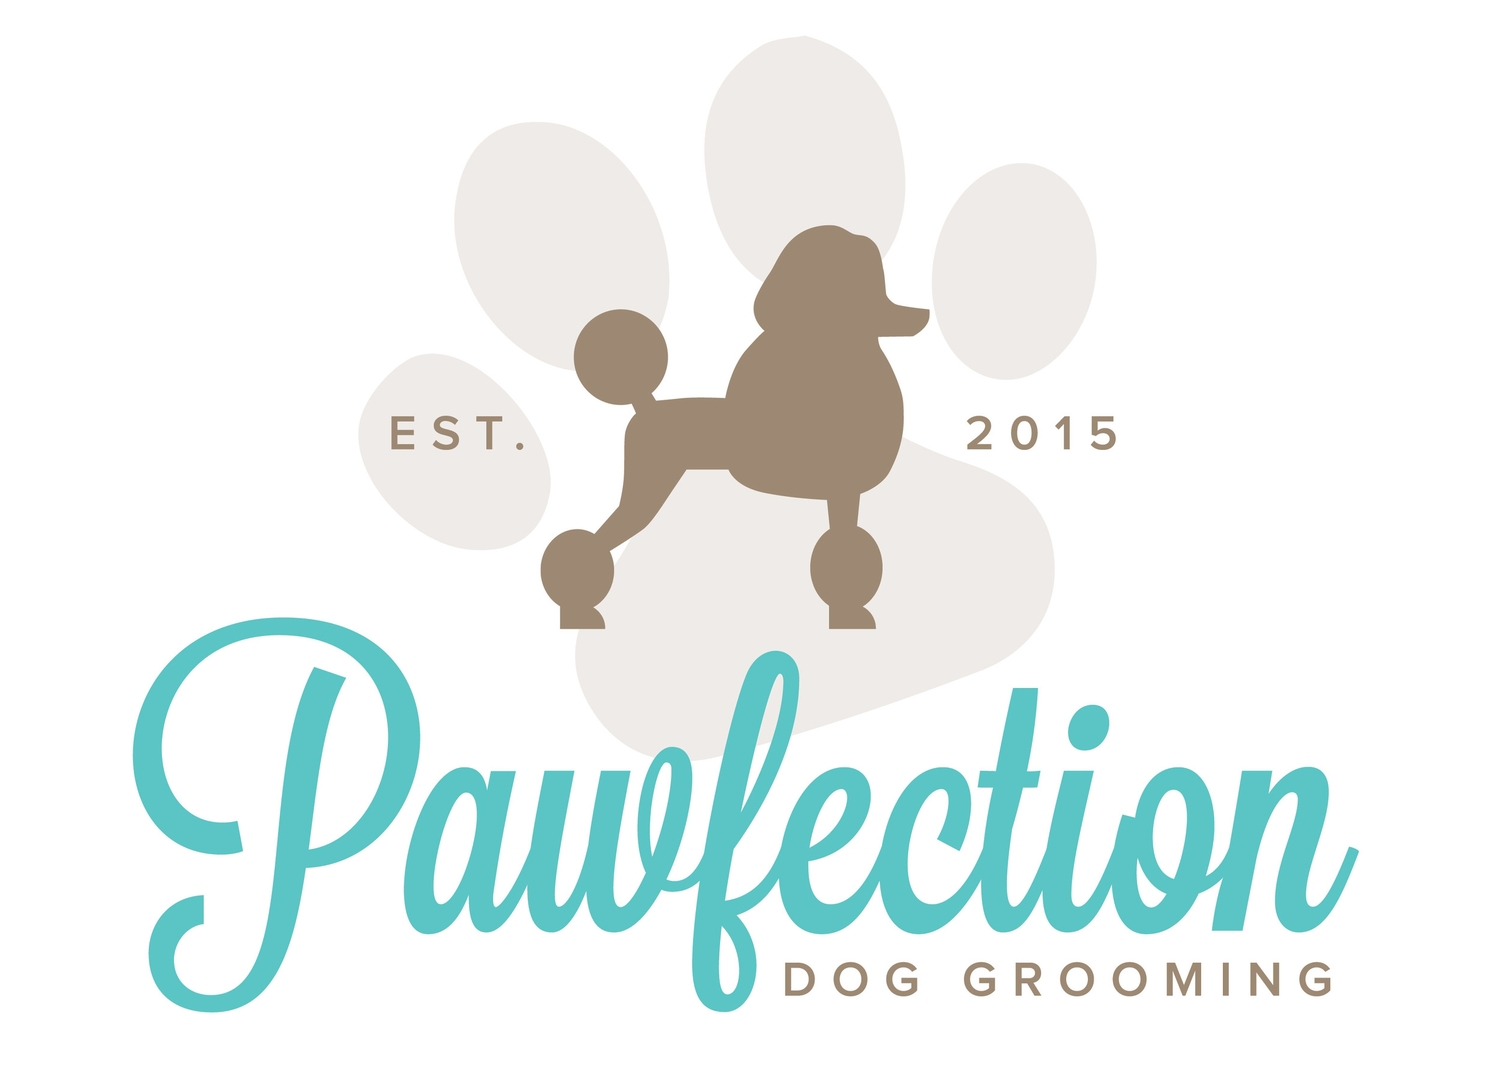 Pawfection Dog Grooming